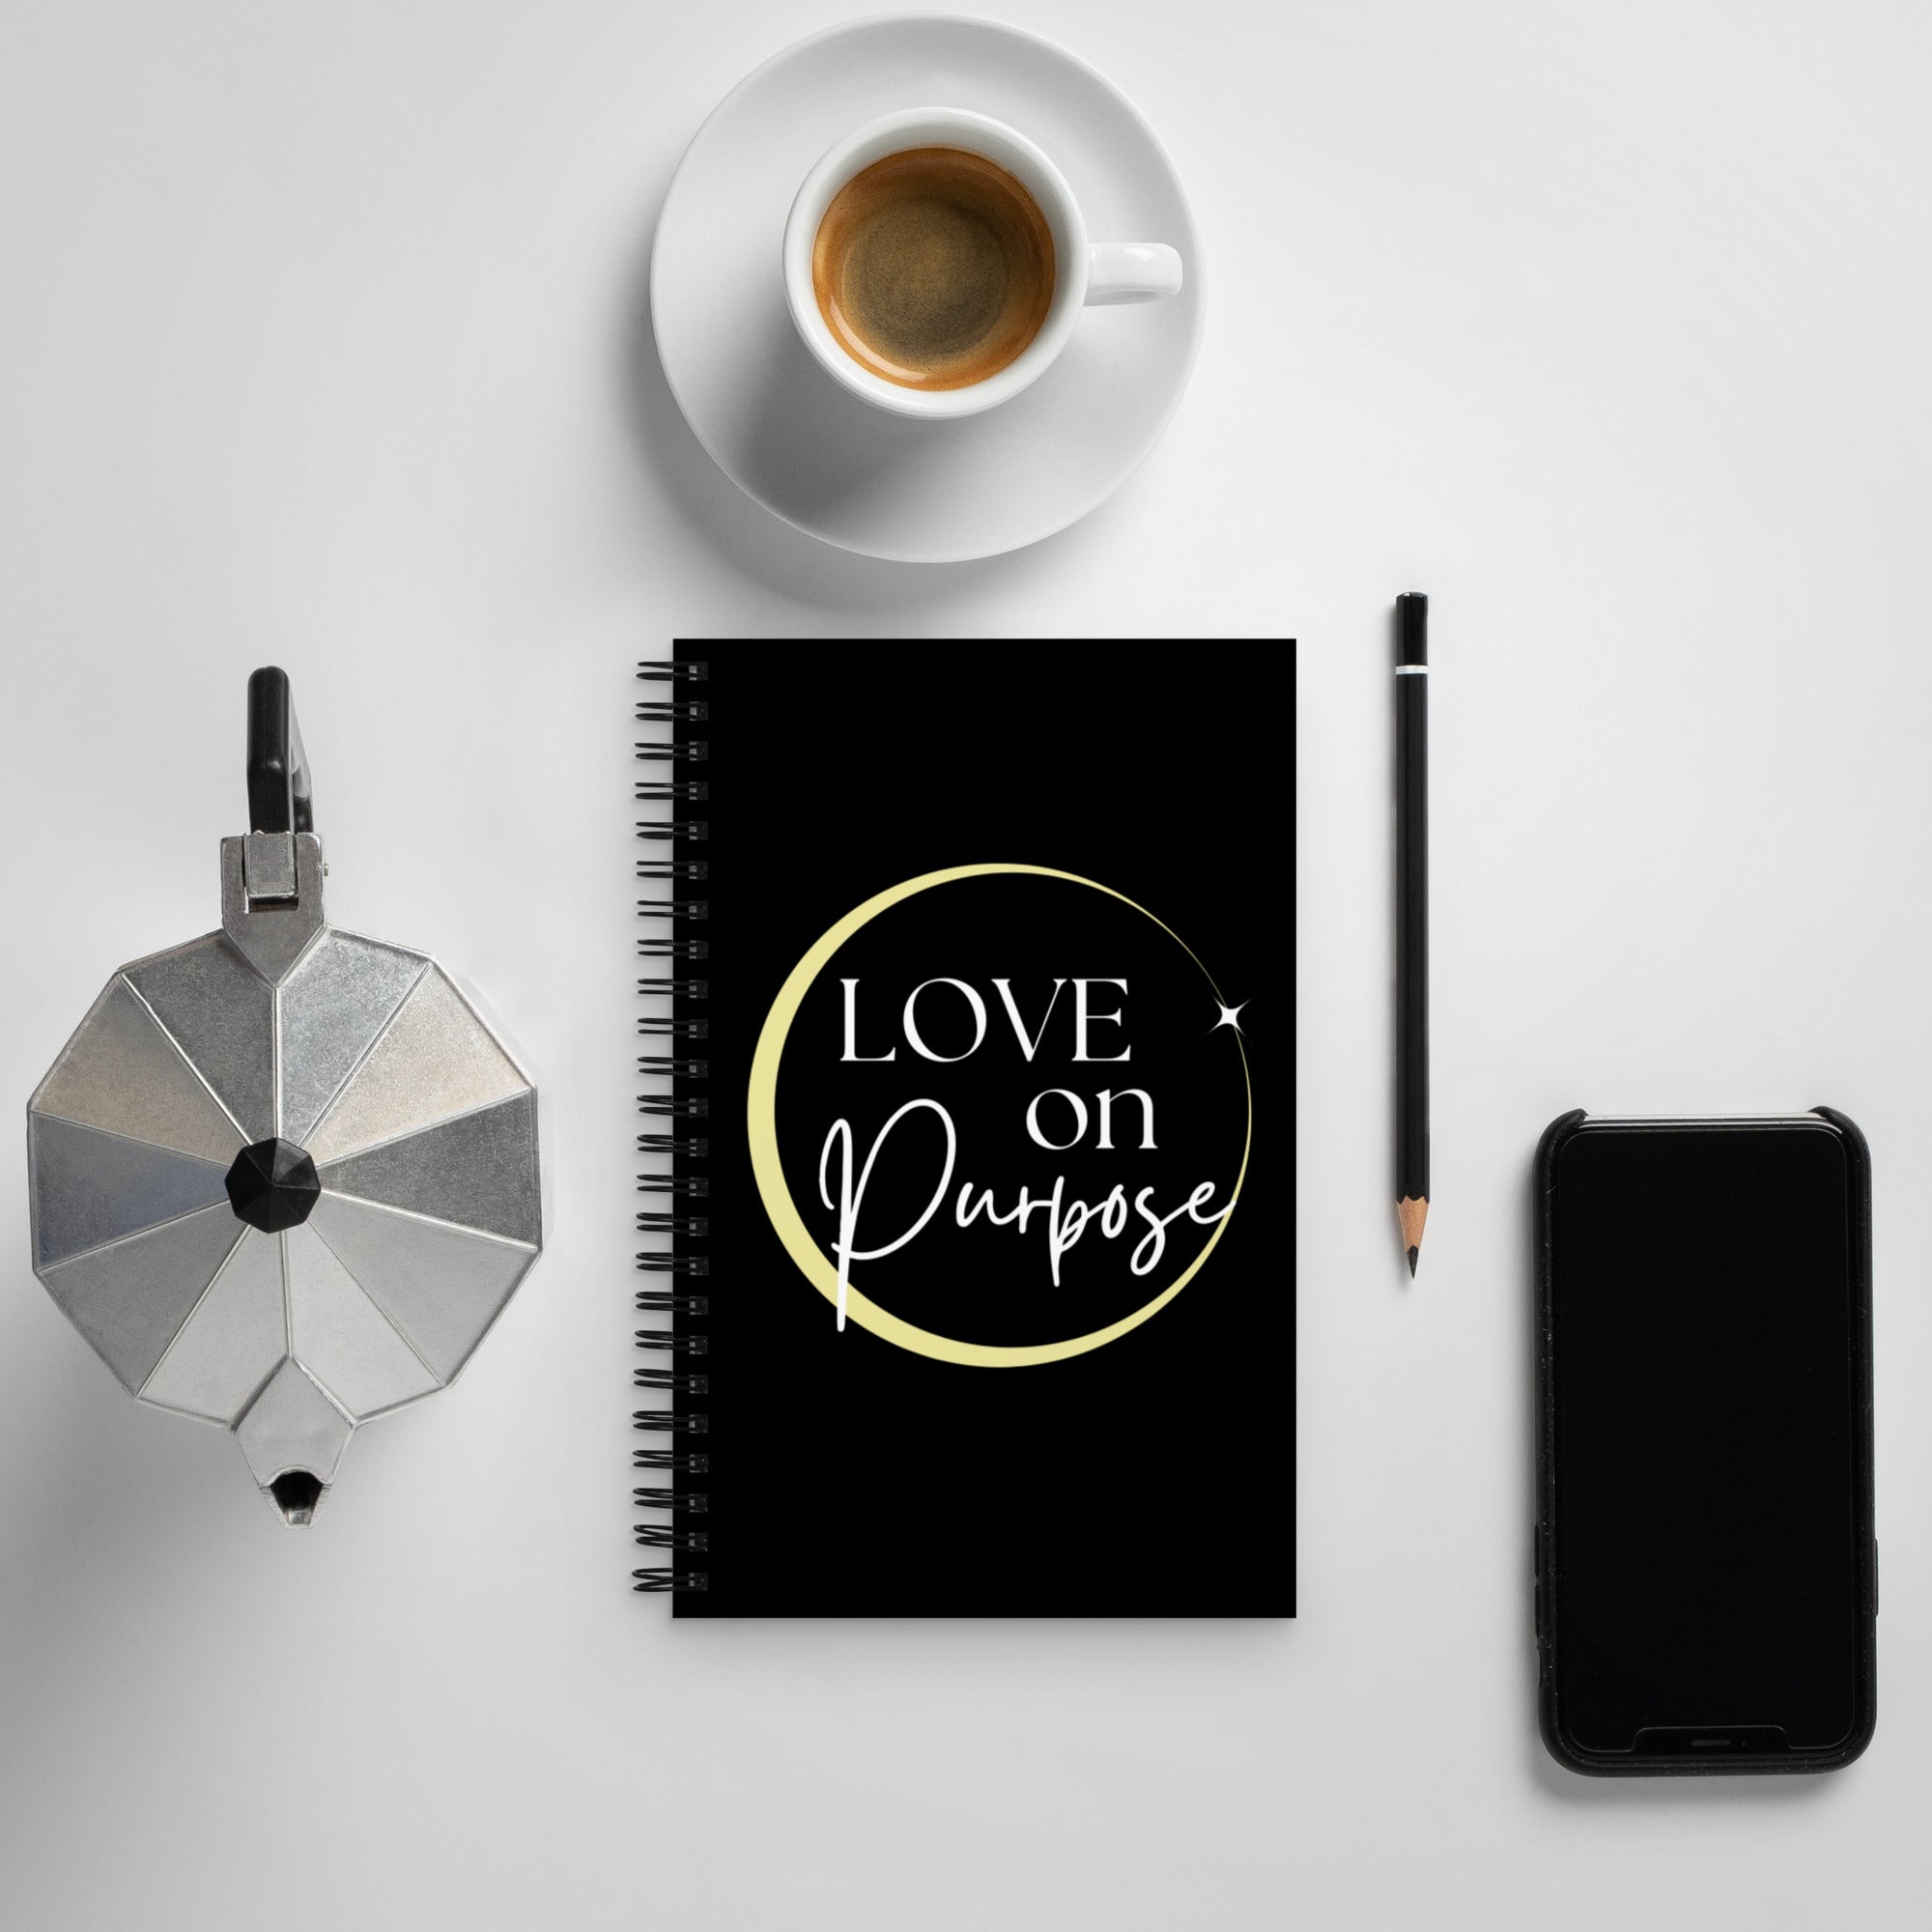 Love on Purpose - Spiral notebook